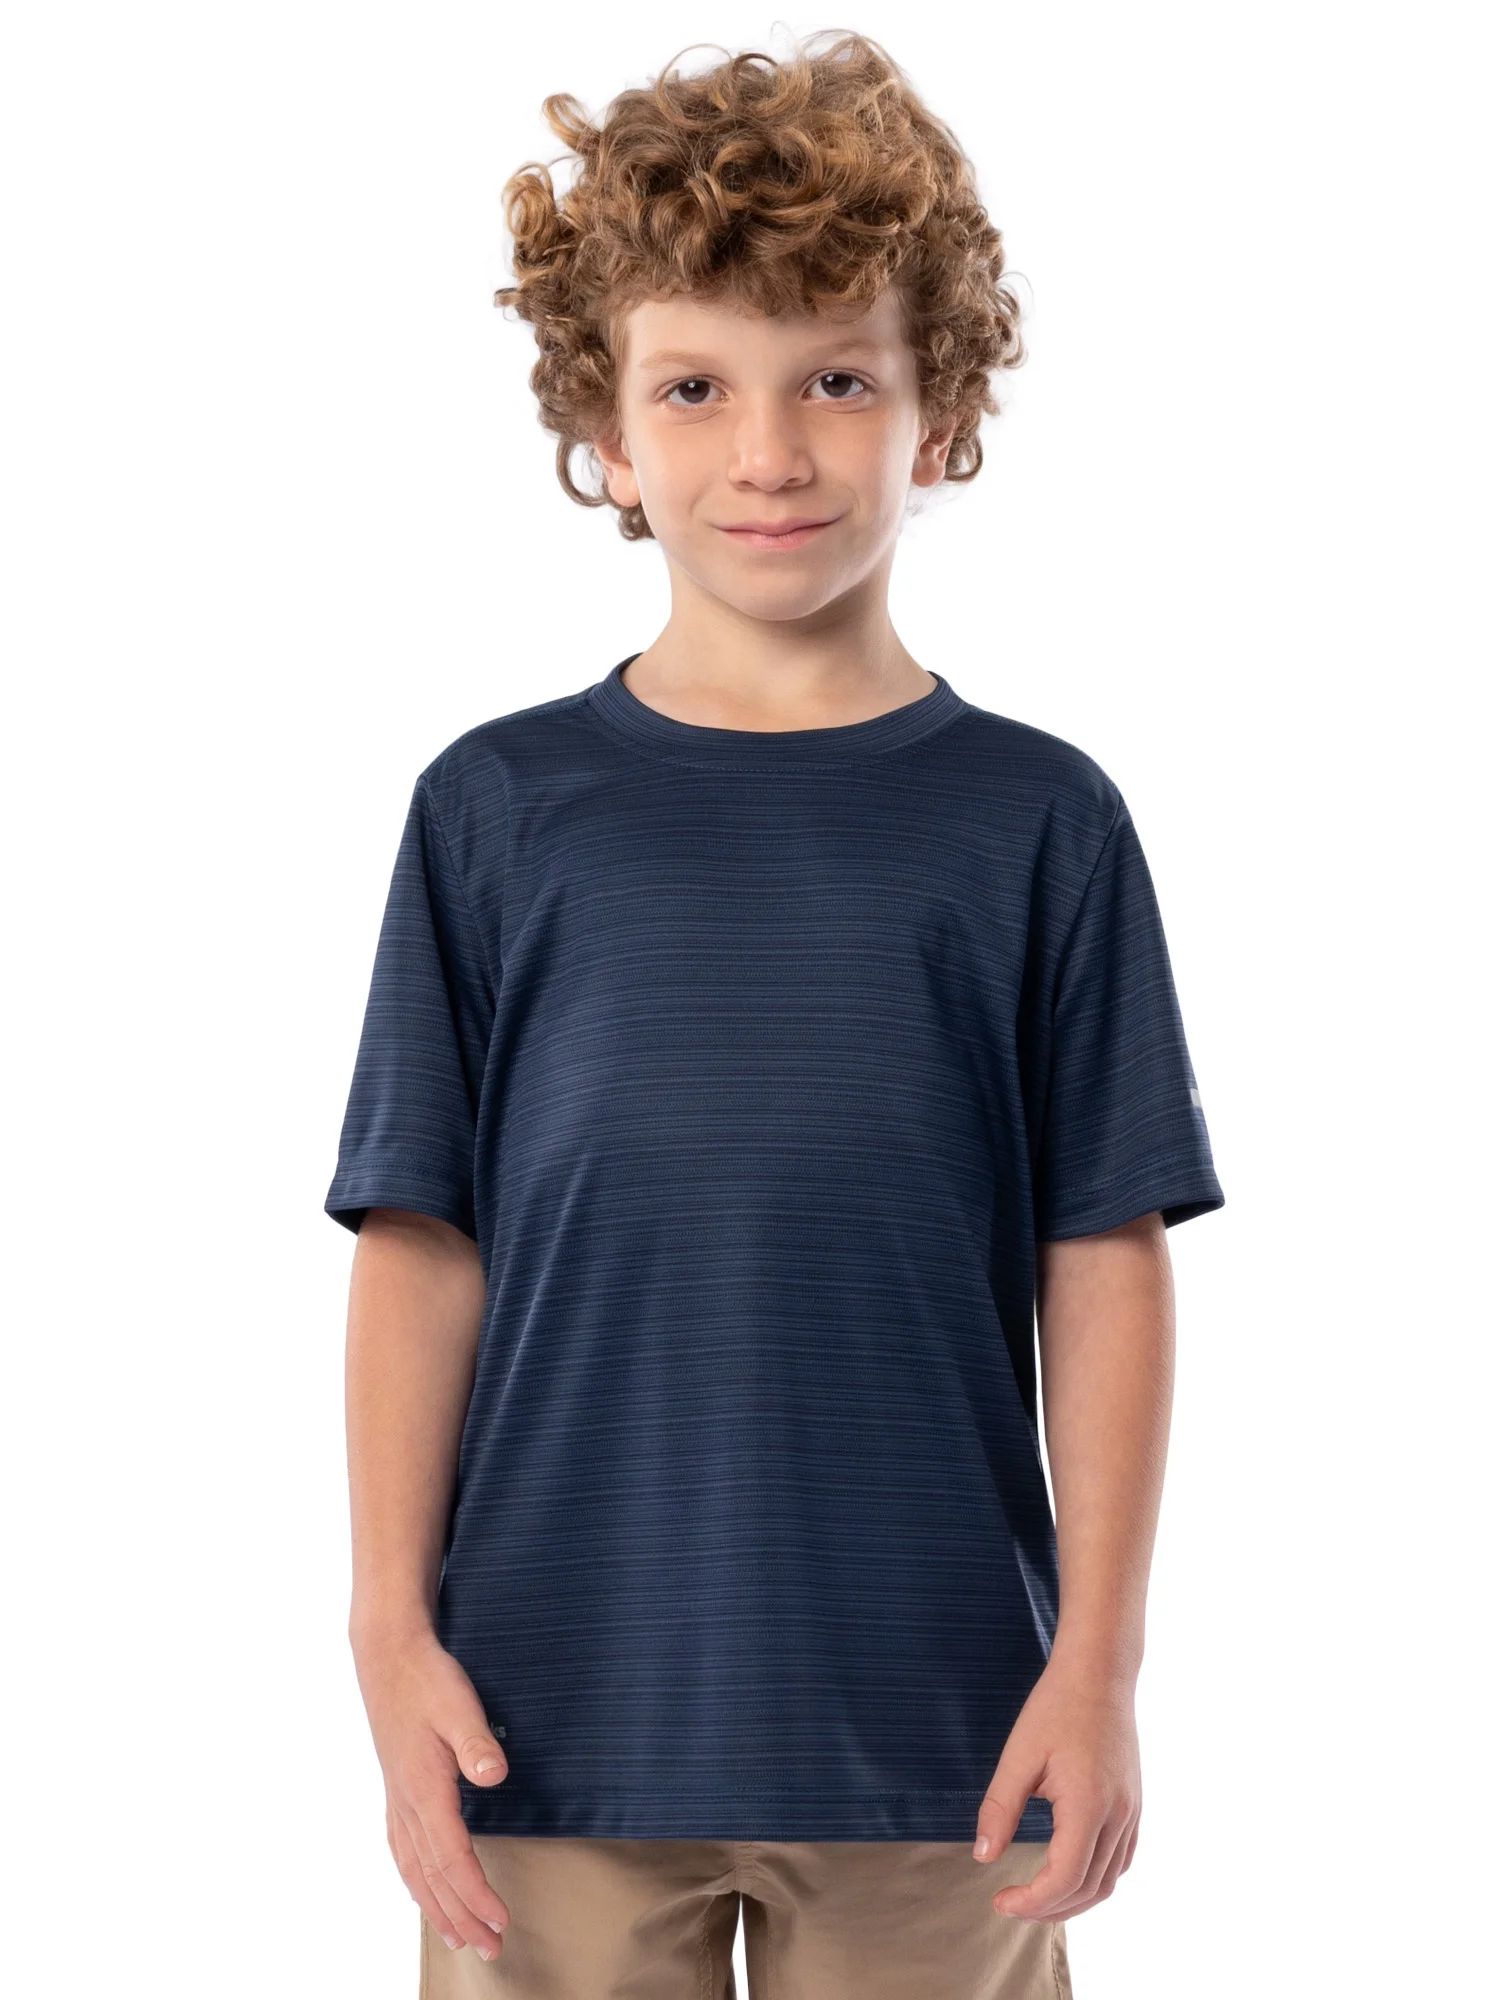 Athletic Works Boy's Short Sleeve Core Tee, Sizes 4-18 & Husky | Walmart (US)